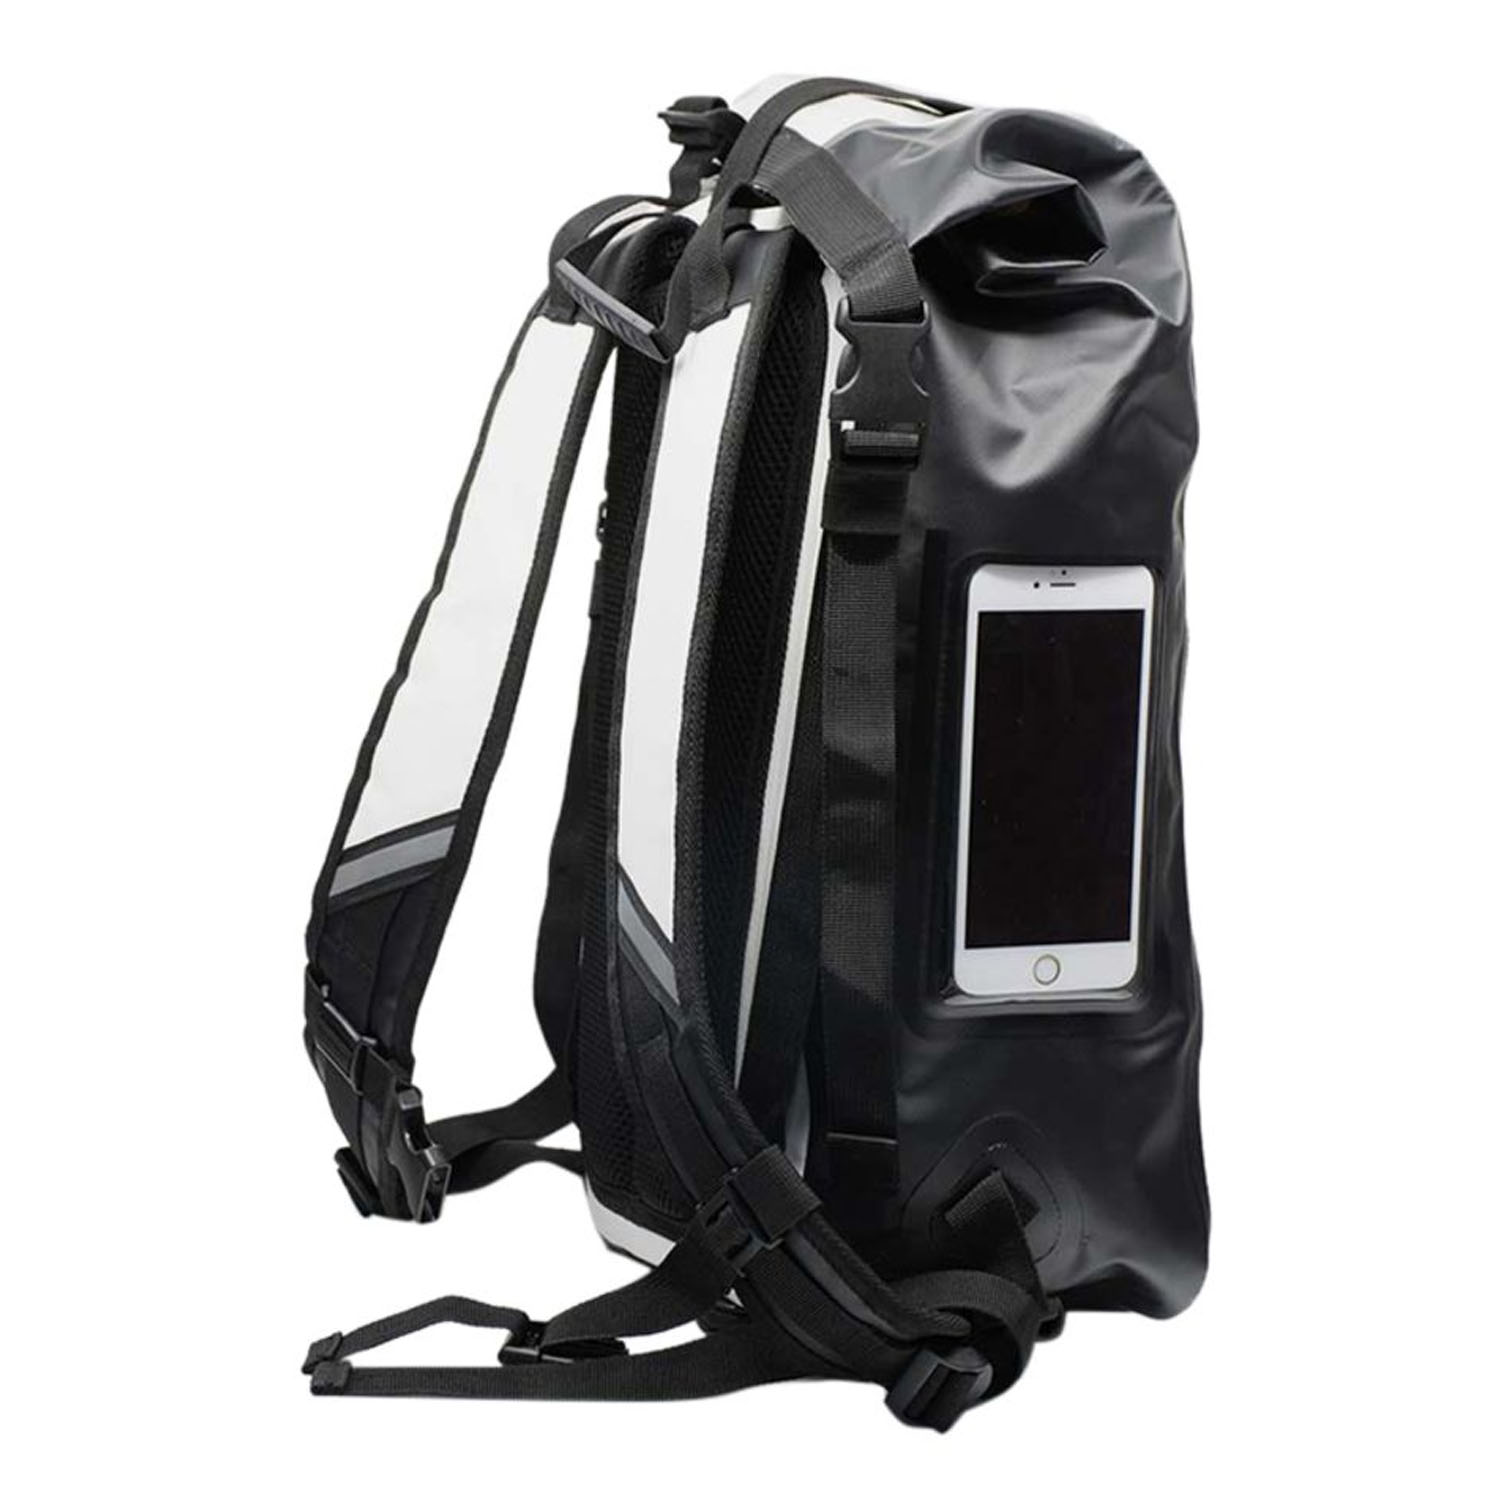 TRX Travel Style Waterproof Dry Backpack Bag 25 L-Black/White Price in ...